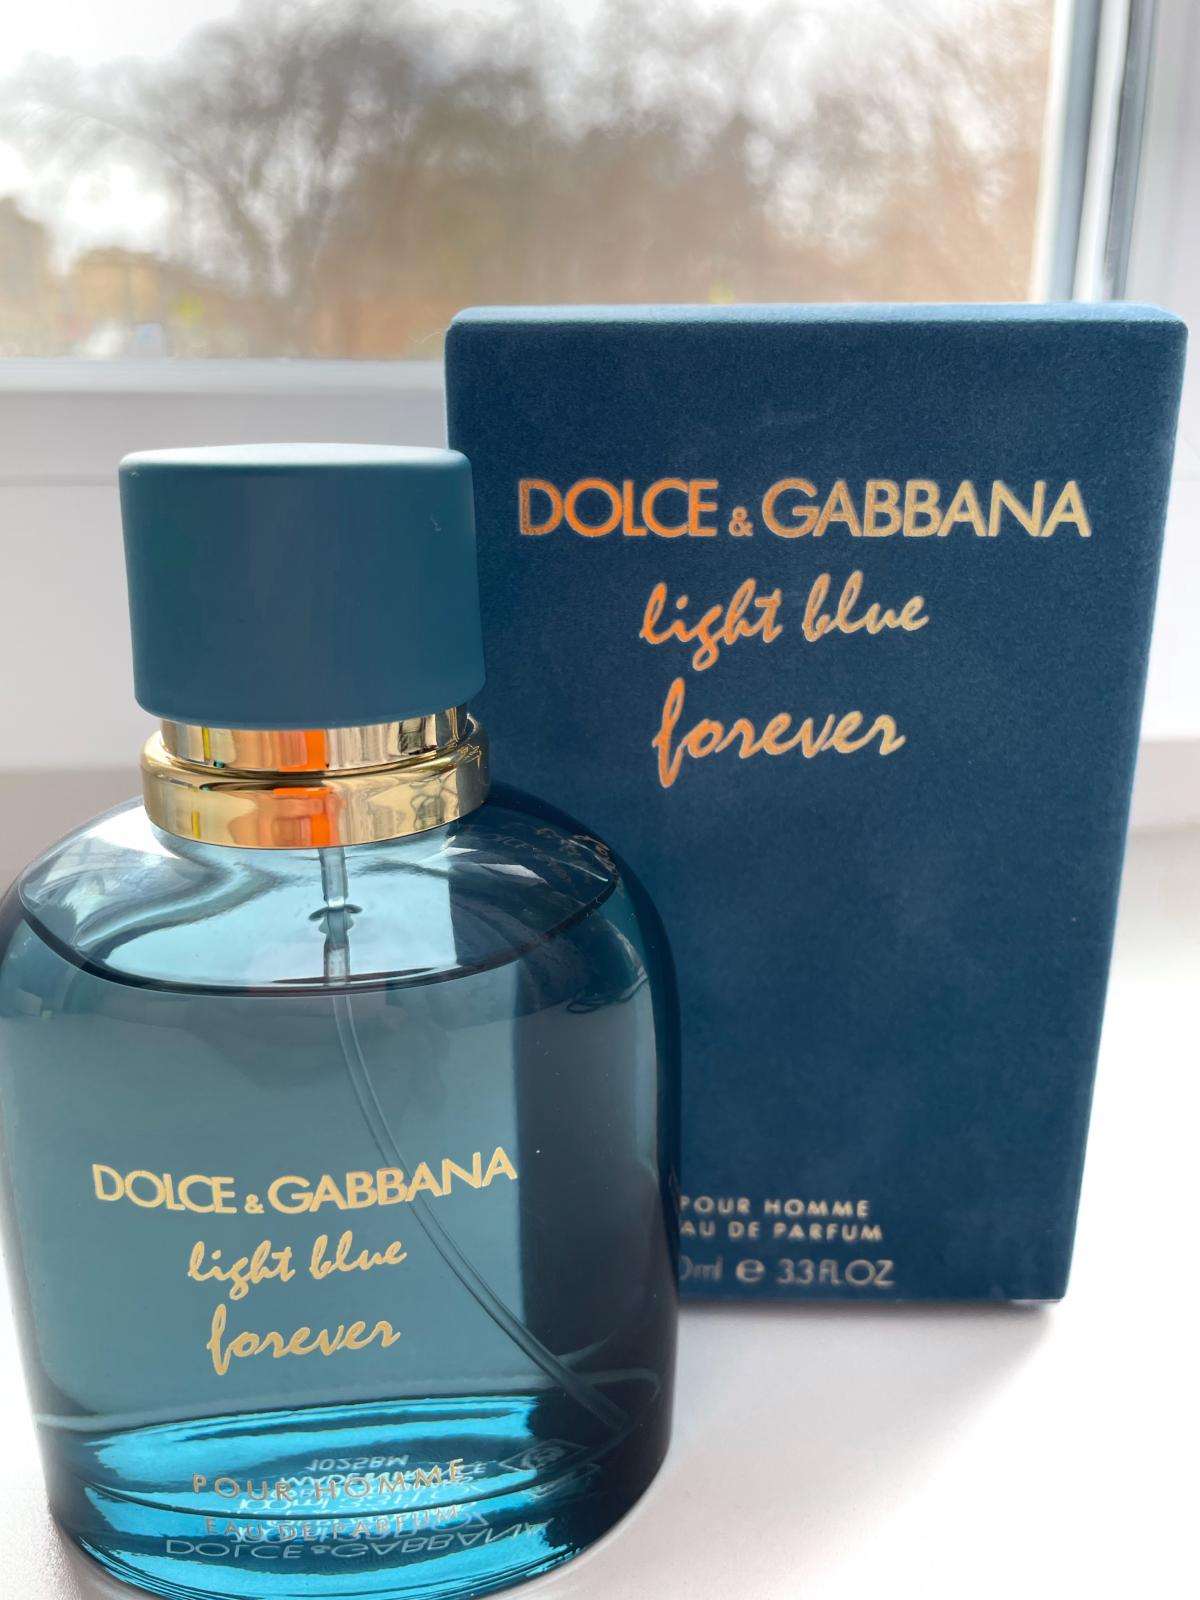 Dolce light blue forever homme. Dolce Gabbana Light Blue Forever pour homme. Dolce & Gabbana Light Blue Forever pour homme EDP, 100 ml. Лайт Блю Форевер Дольче Габбана 100 мл. Дольче Габбана Лайт Блю Форевер.